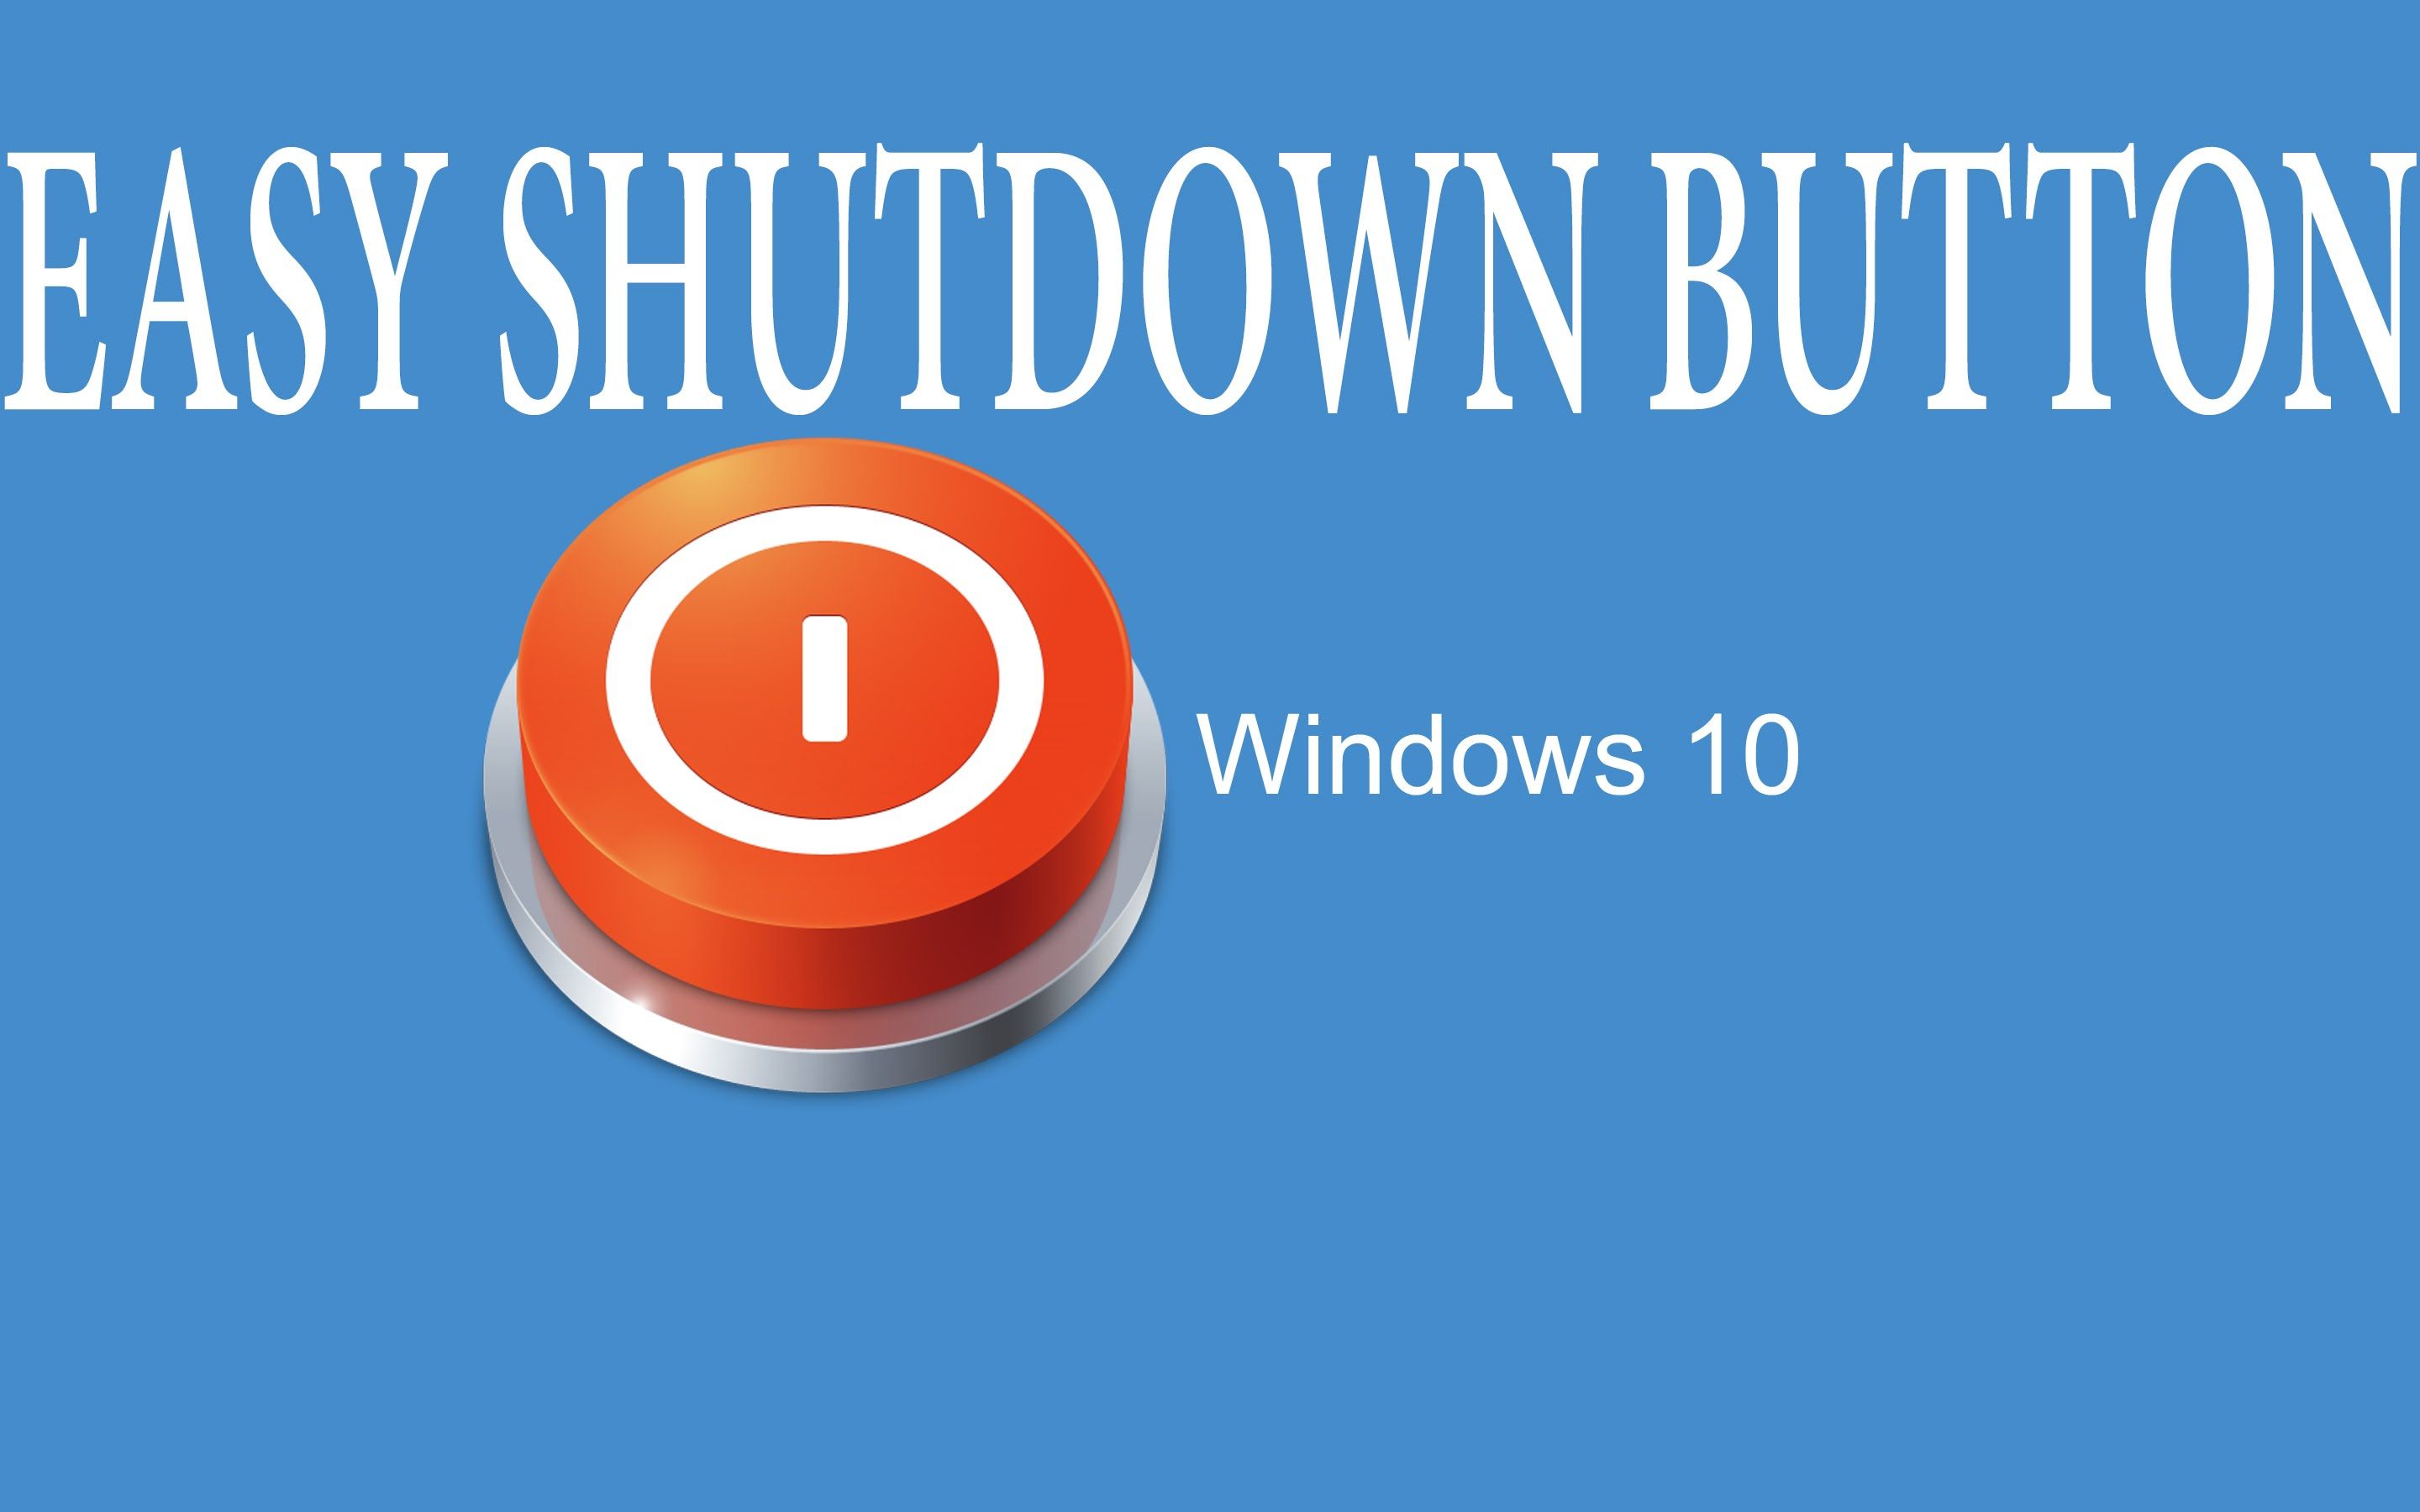 Windows 10: Create A Shutdown Button On The Desktop. Windows 10